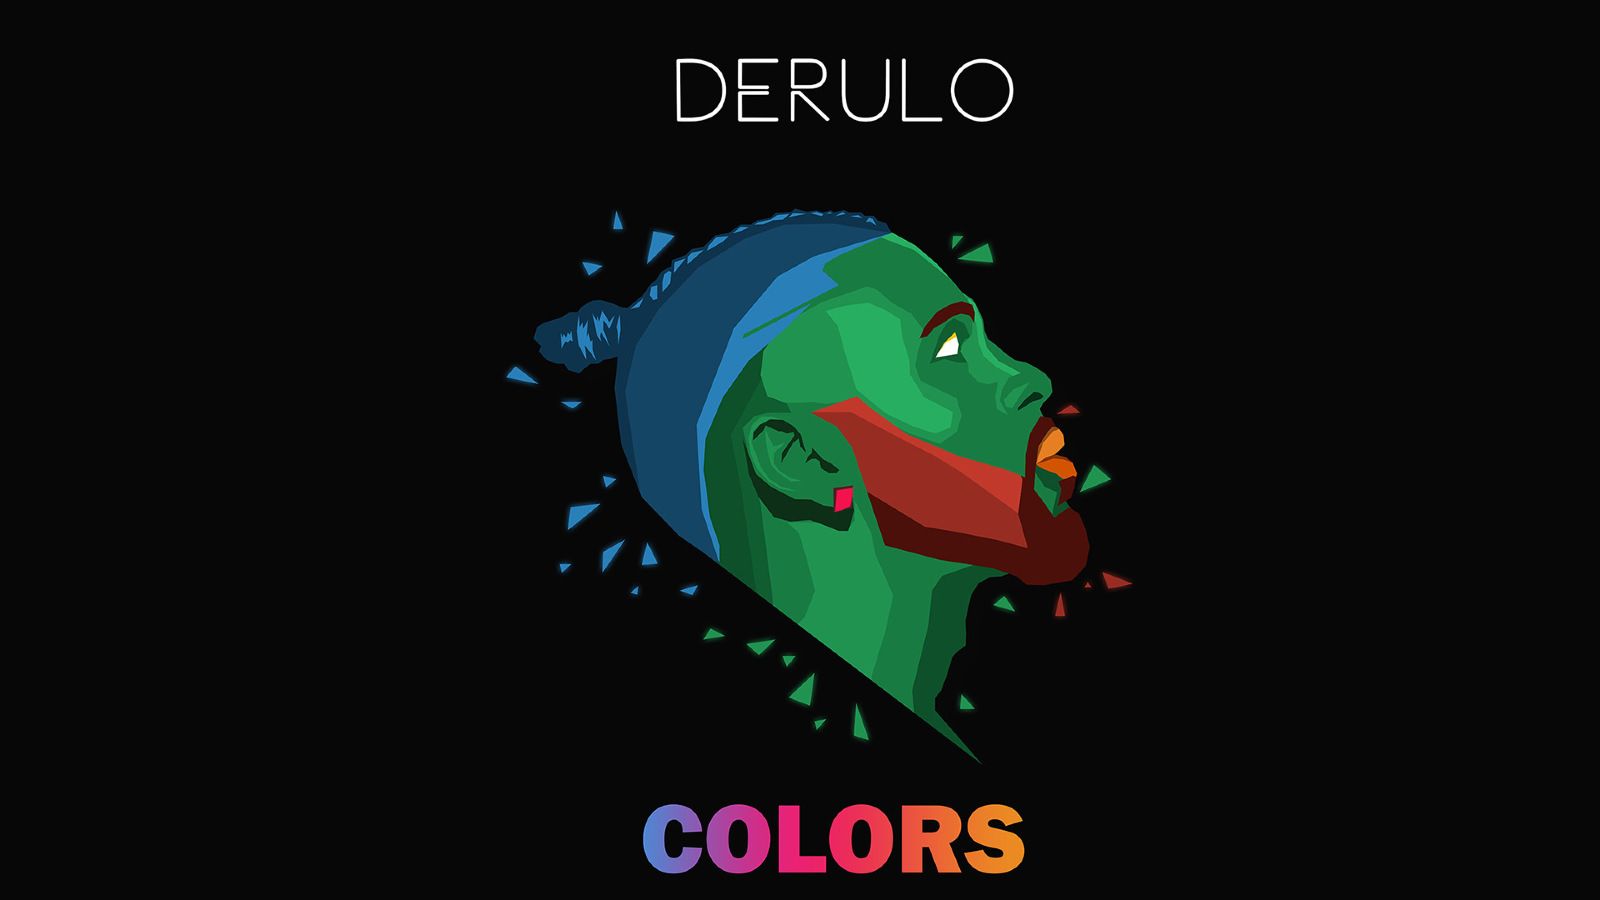 Jason Derulo Color Art 1600x900 Resolution Wallpaper, HD Artist 4K Wallpaper, Image, Photo and Background